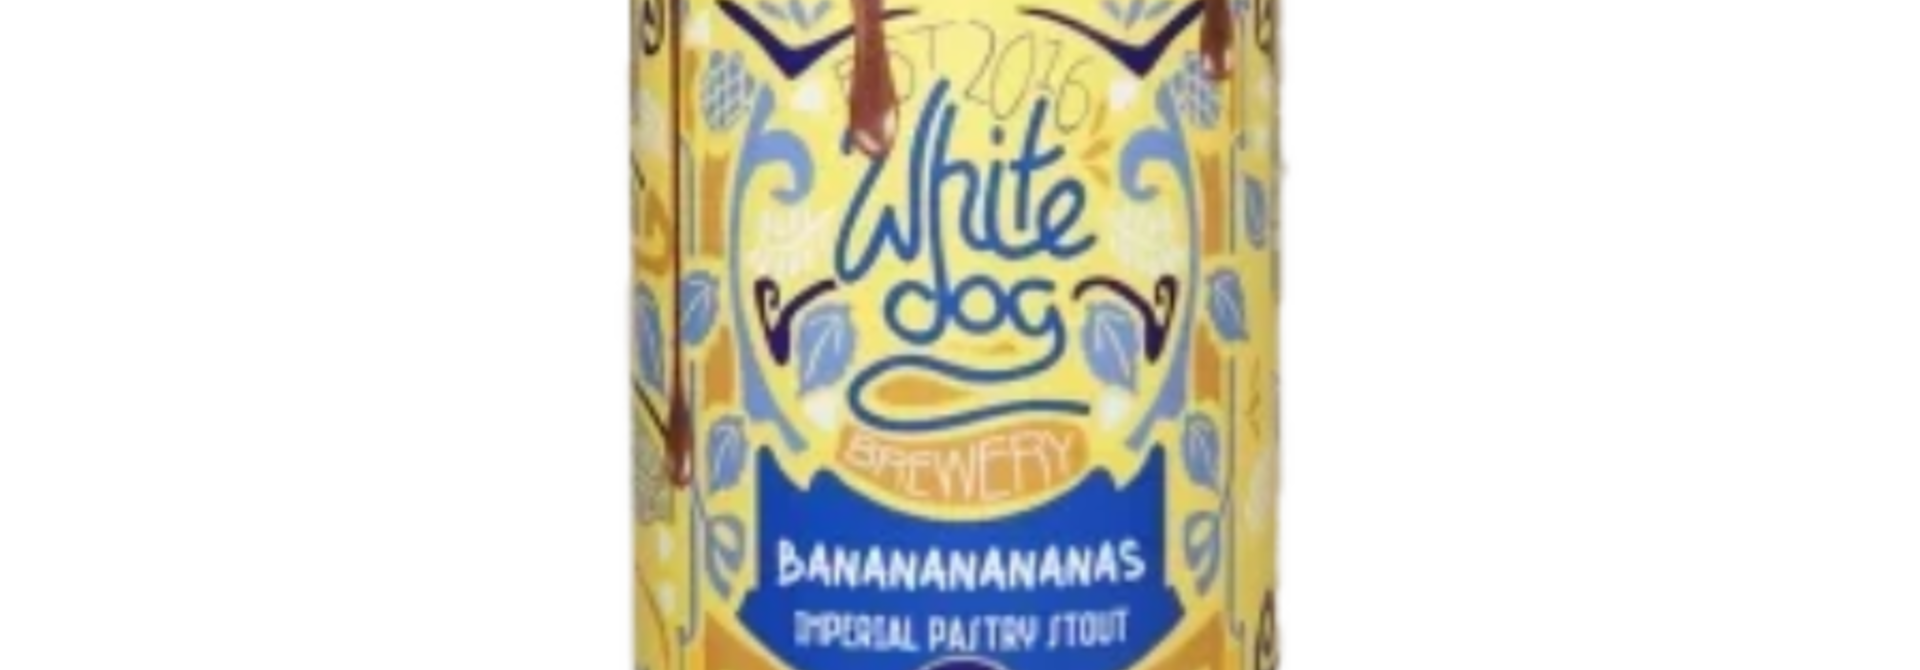 White Dog Bananananas 44CL 10,4%